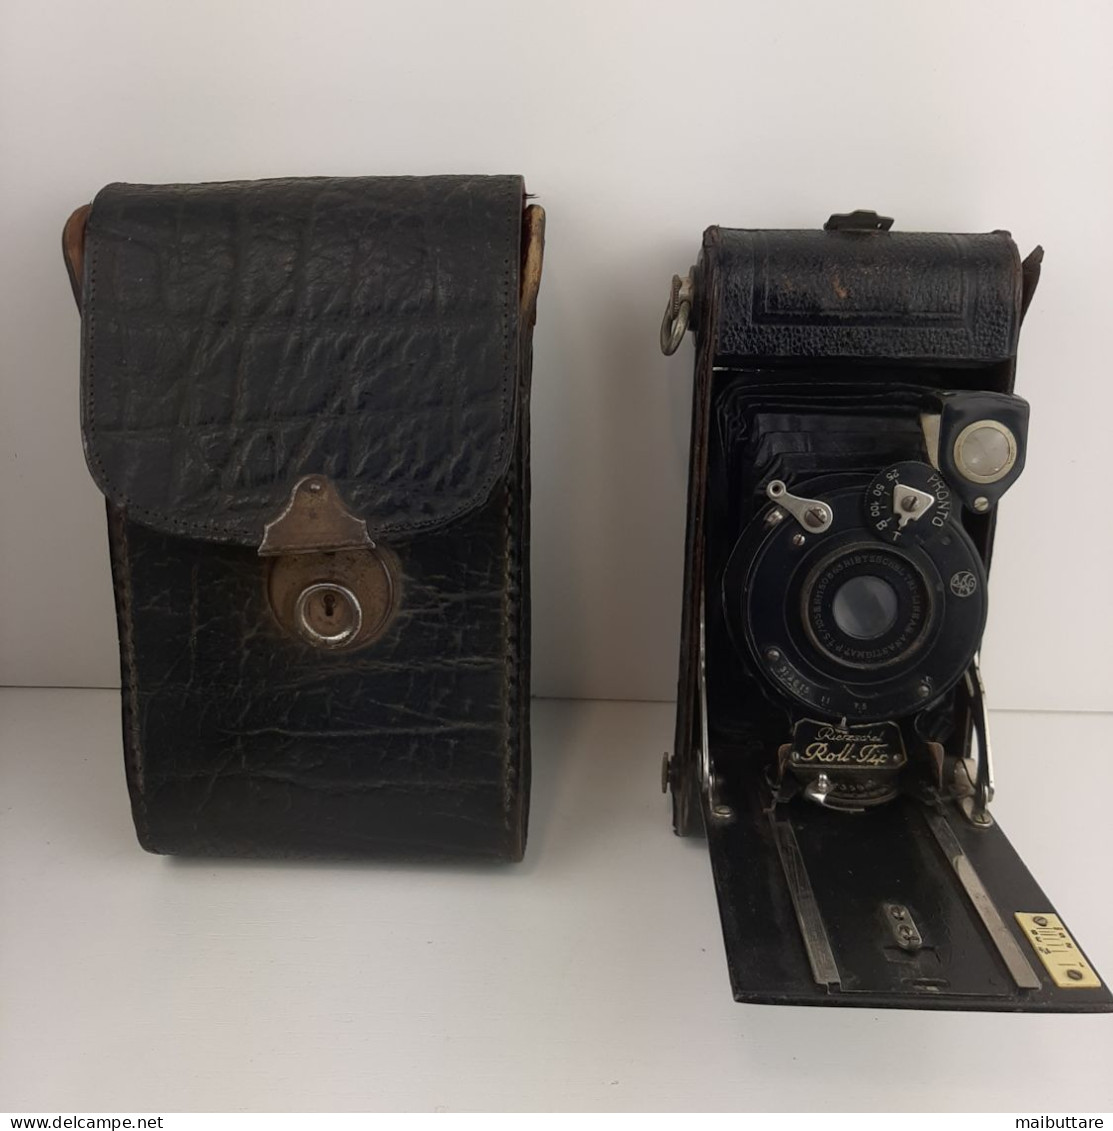 Fotocamera Rietzschel Roll - Tip, Con Custodia Originale Obiettivo Rietzschel TRI - LINEARE Anastigmat Periodo 1920 - Cámaras Fotográficas